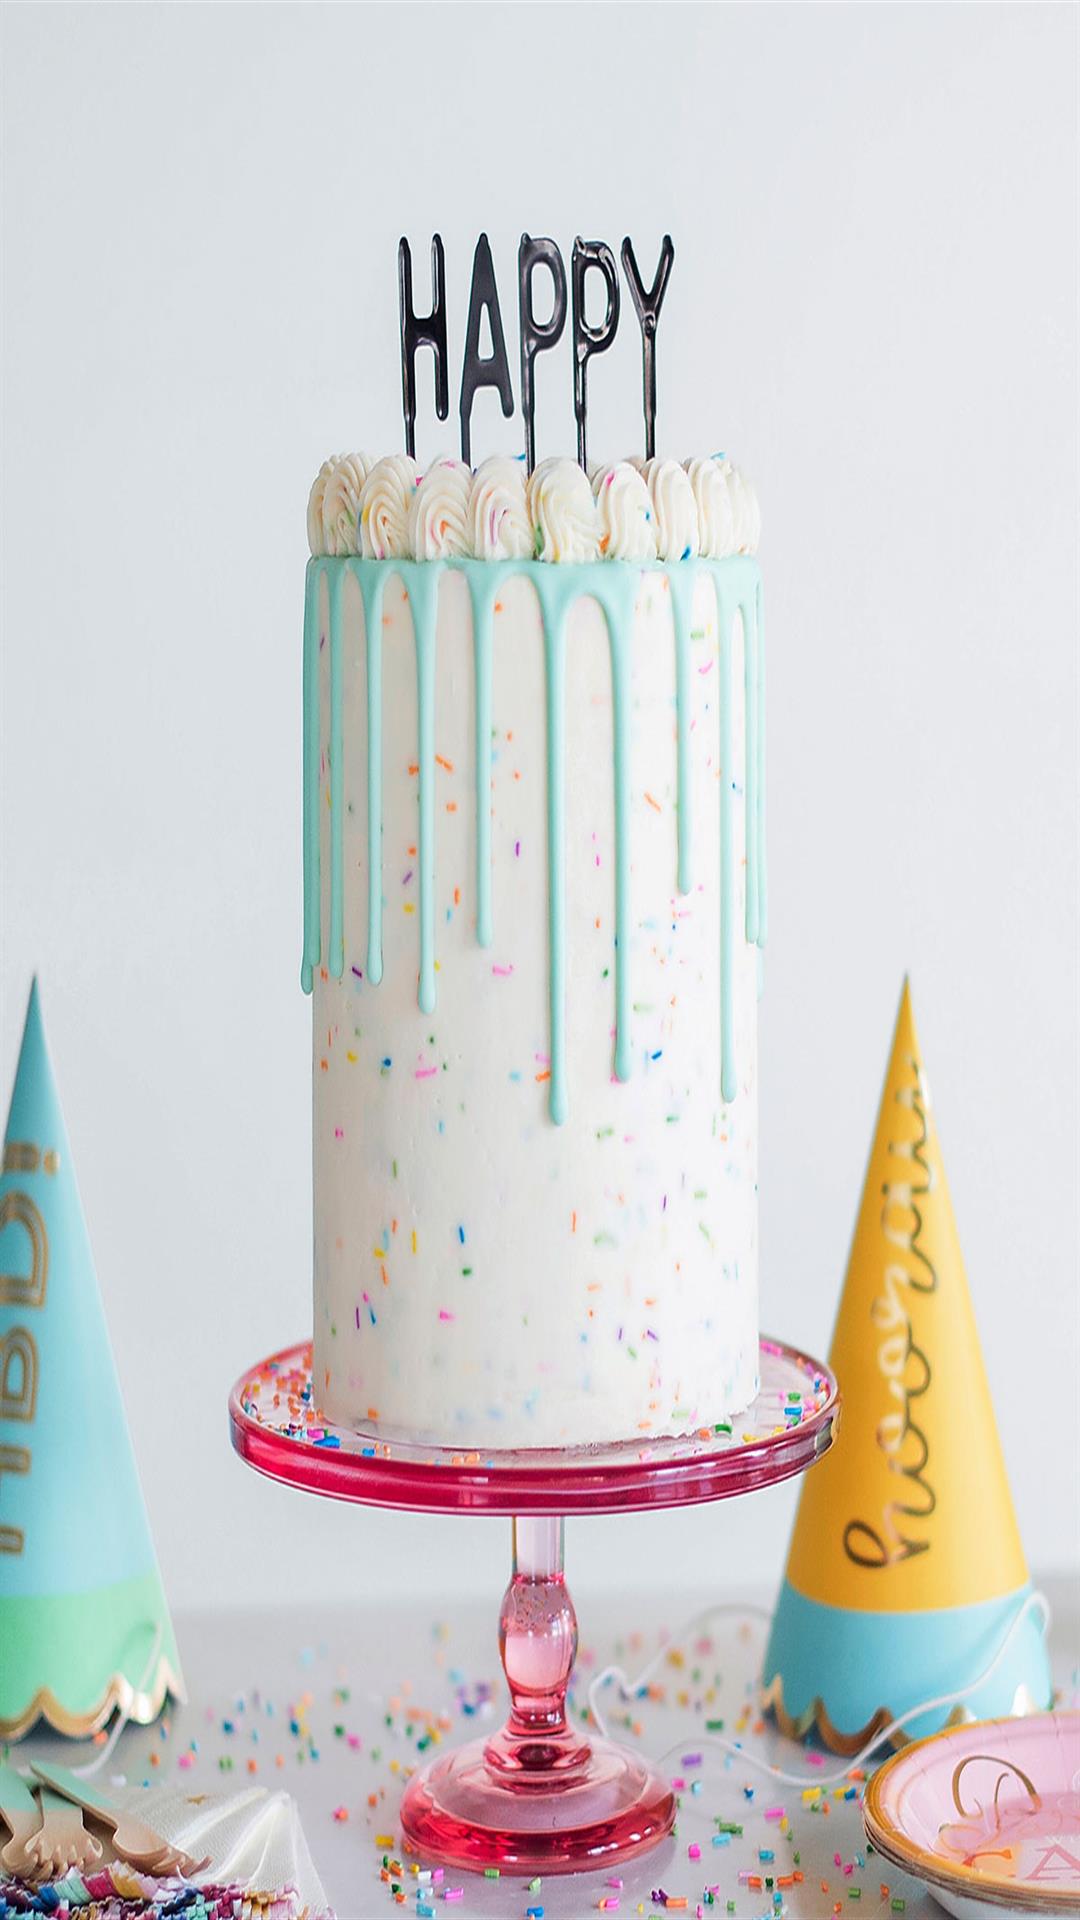 Happy 52 birthday cake ideas pocker for men｜TikTok Search